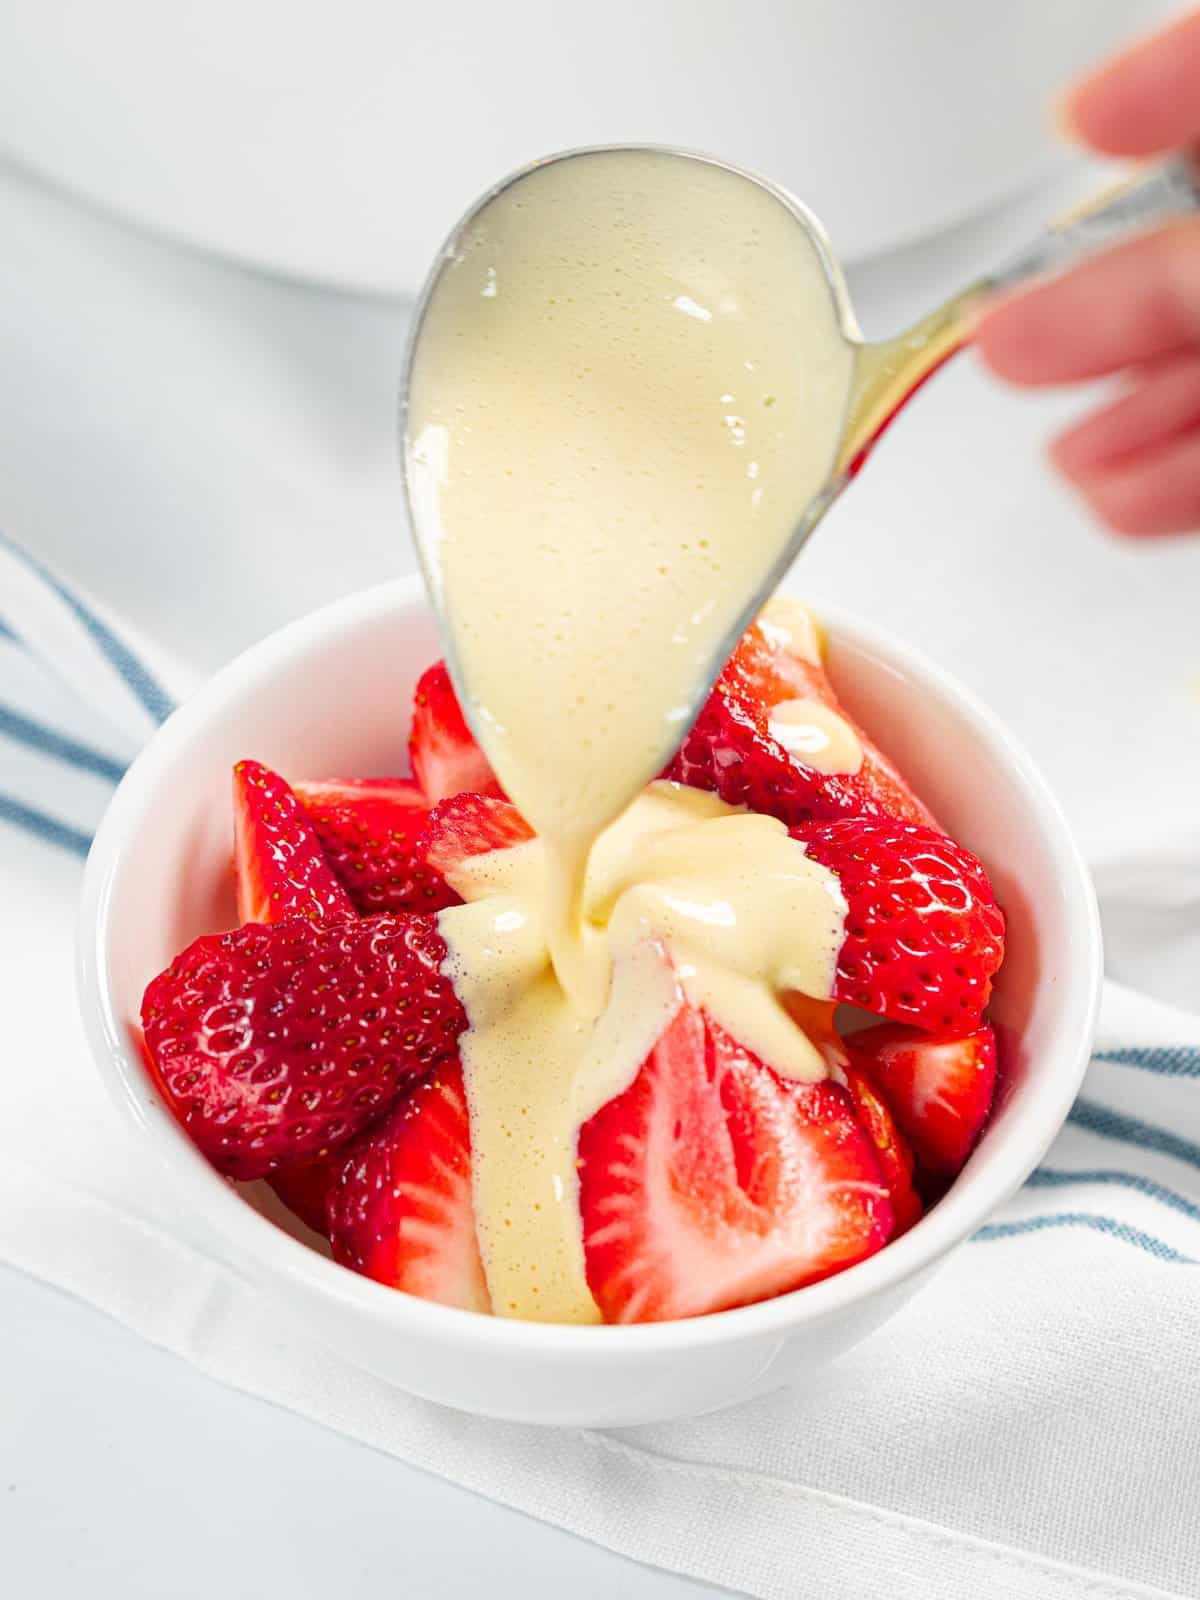 Creamy zabaglione sauce with fresh strawberries.